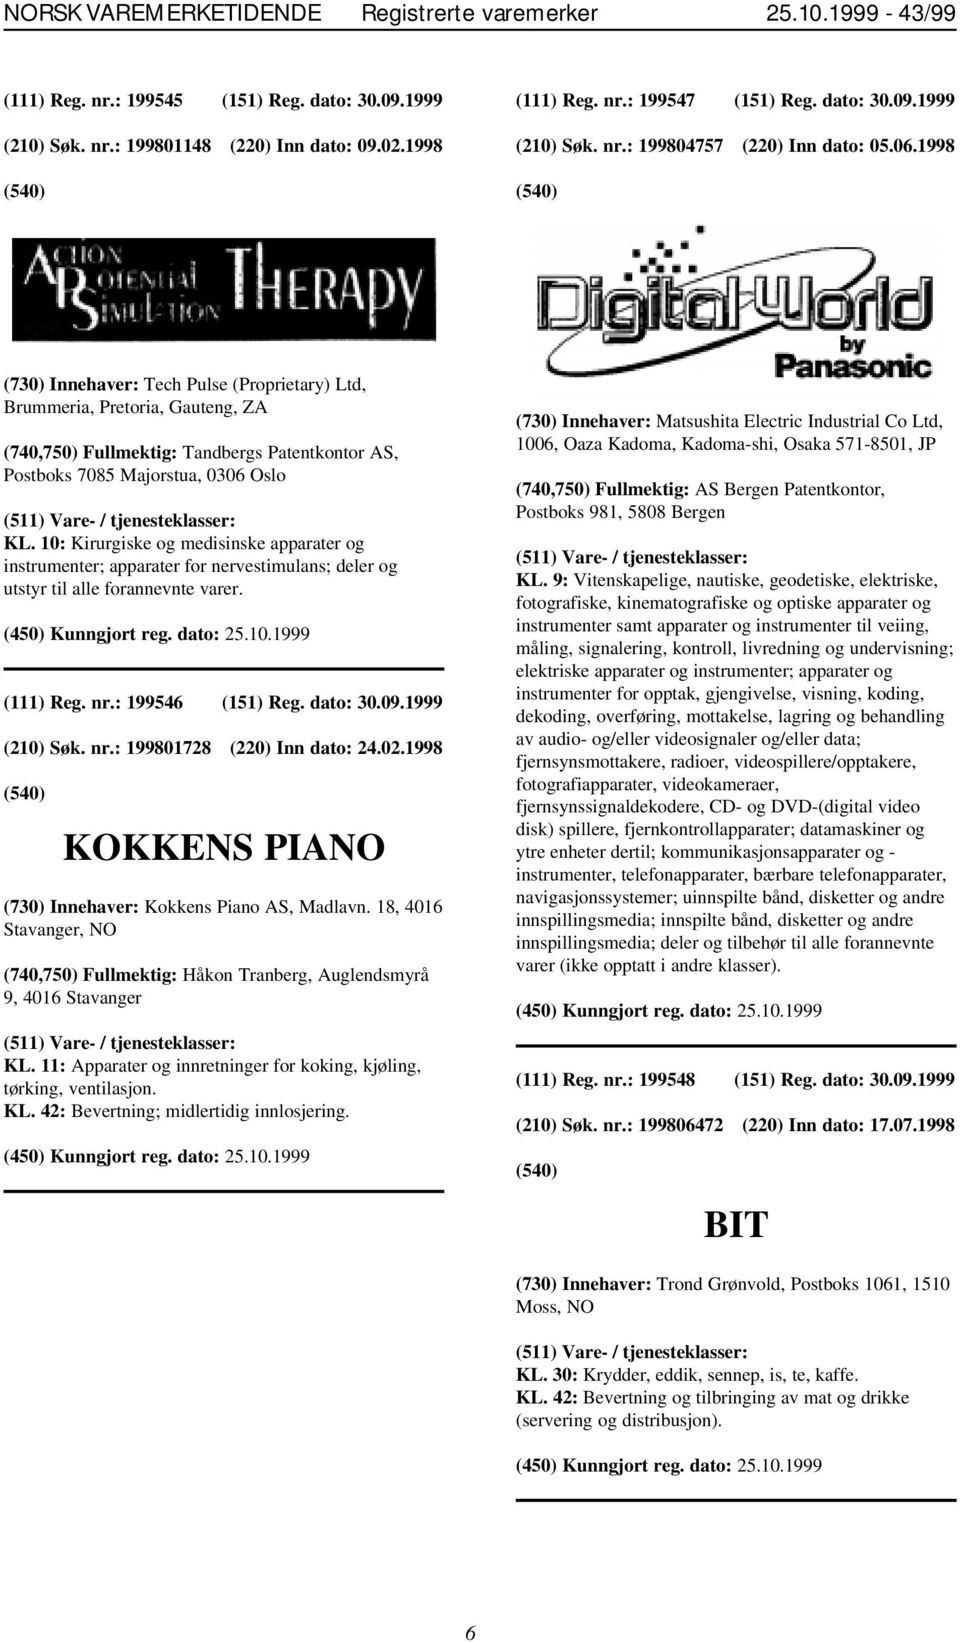 1998 (730) Innehaver: Tech Pulse (Proprietary) Ltd, Brummeria, Pretoria, Gauteng, ZA (740,750) Fullmektig: Tandbergs Patentkontor AS, Postboks 7085 Majorstua, 0306 Oslo KL.